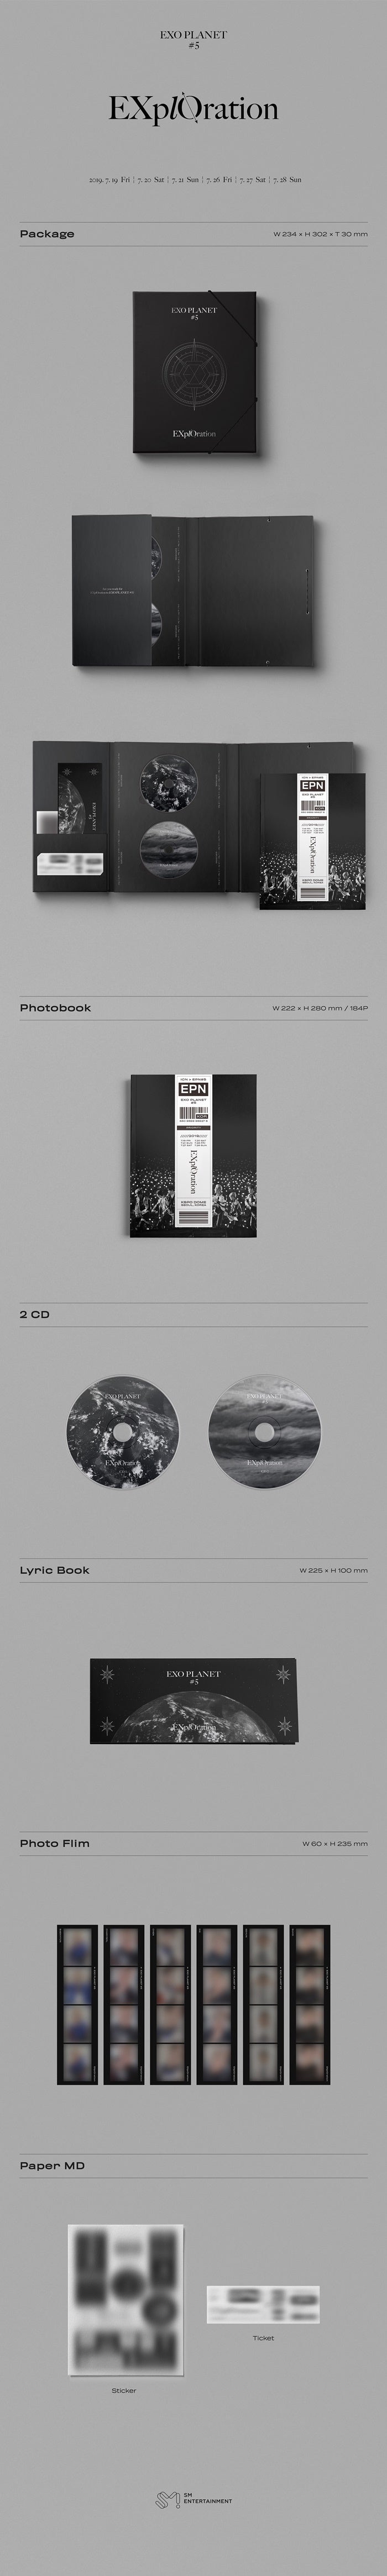 2 CDs
1 Photo Book (184 pages)
1 Lyric Book
1 Photo Film
1 Sticker
1 Ticket